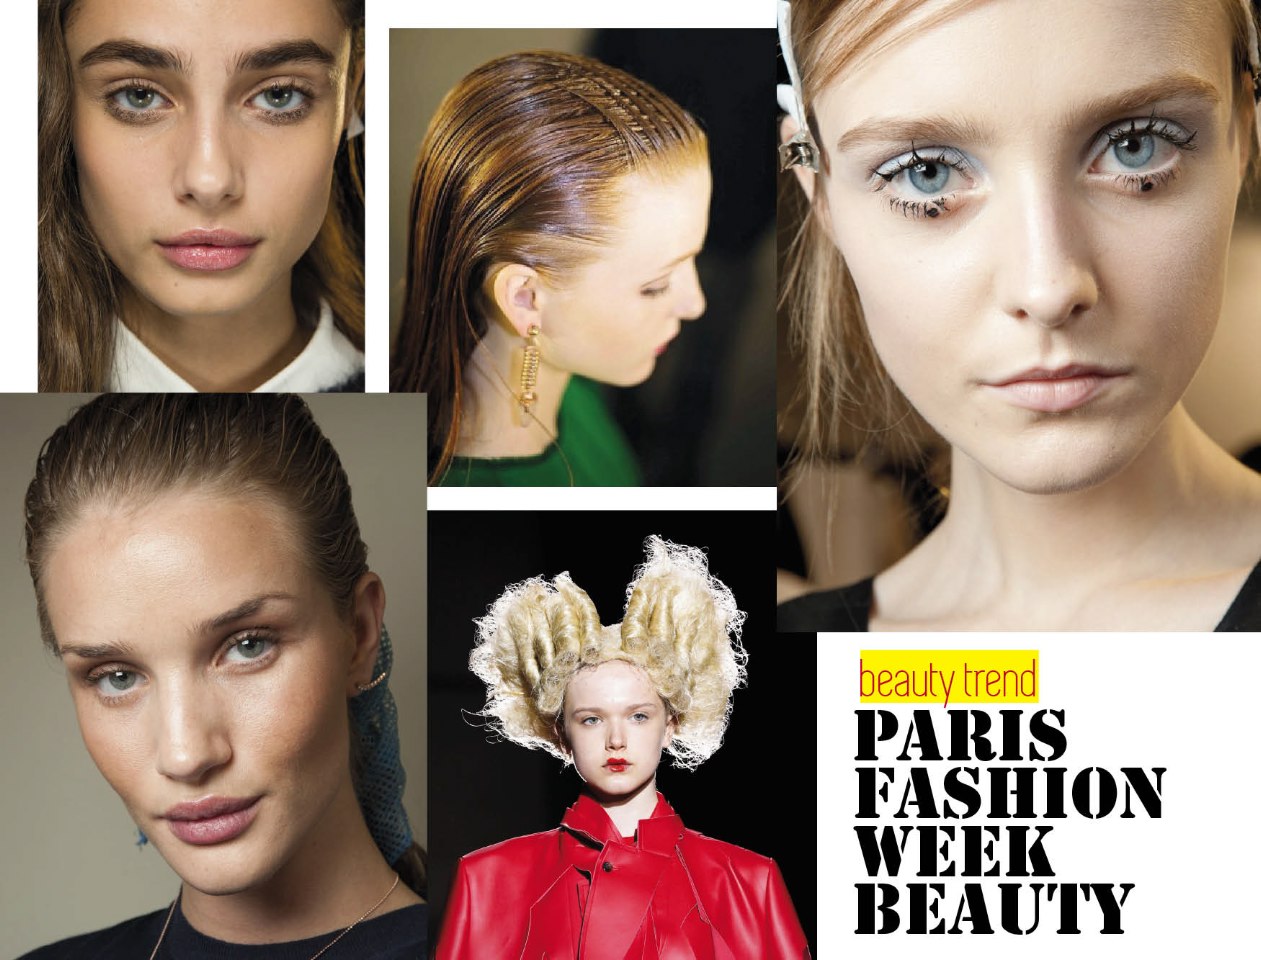 Paris Fashion Week Beauty